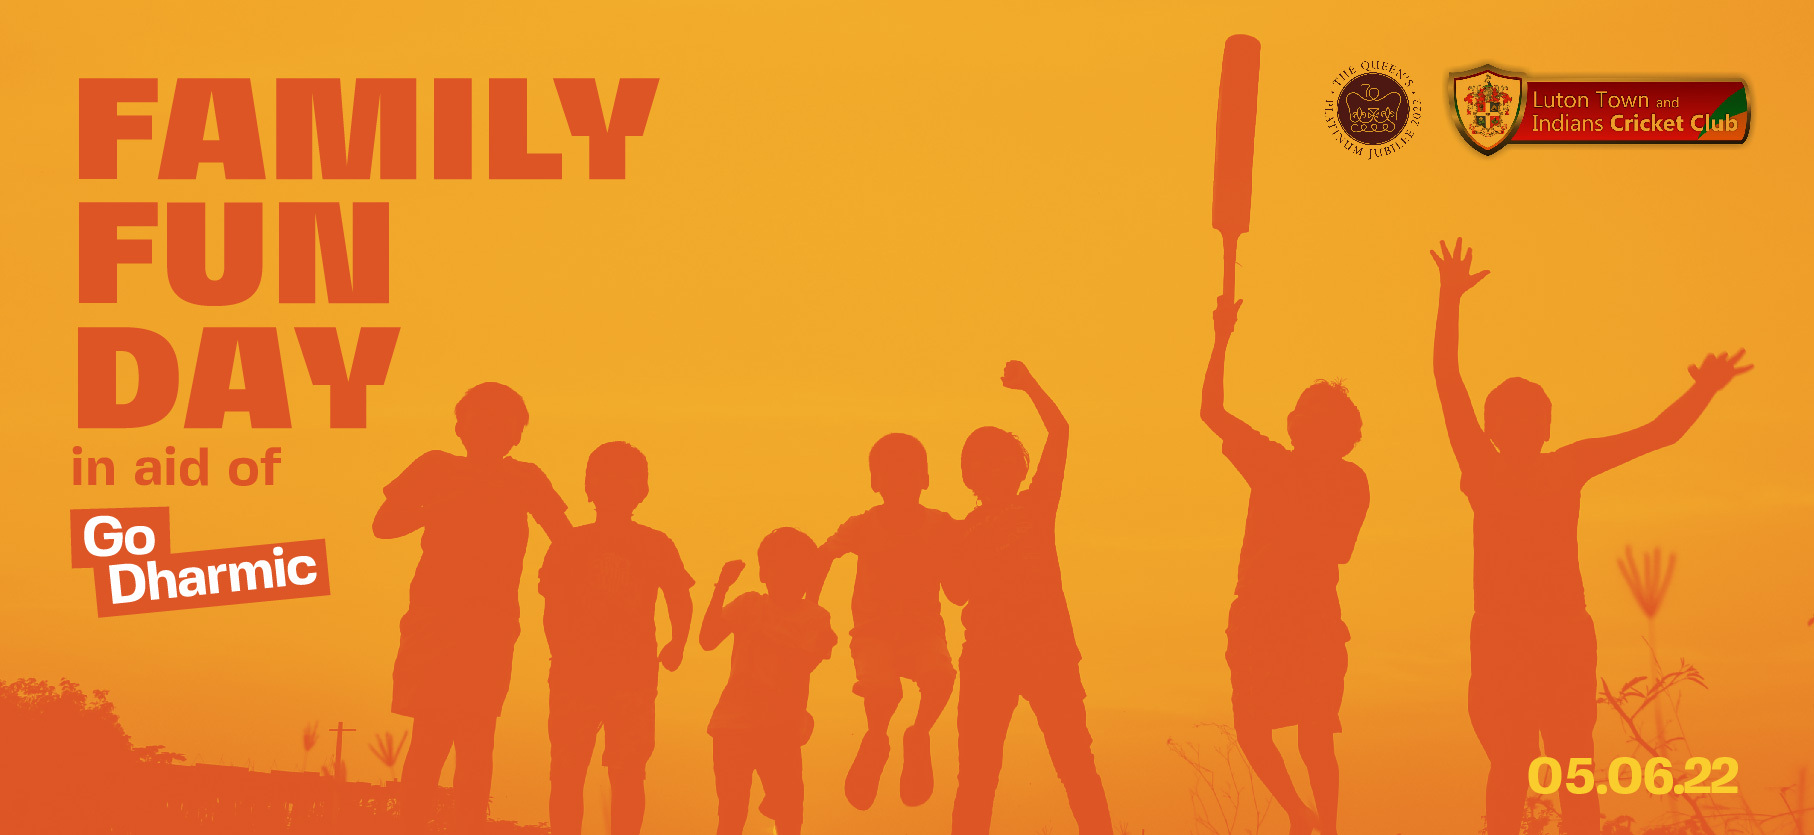 Family Fun Cricket Day | Go Dharmic